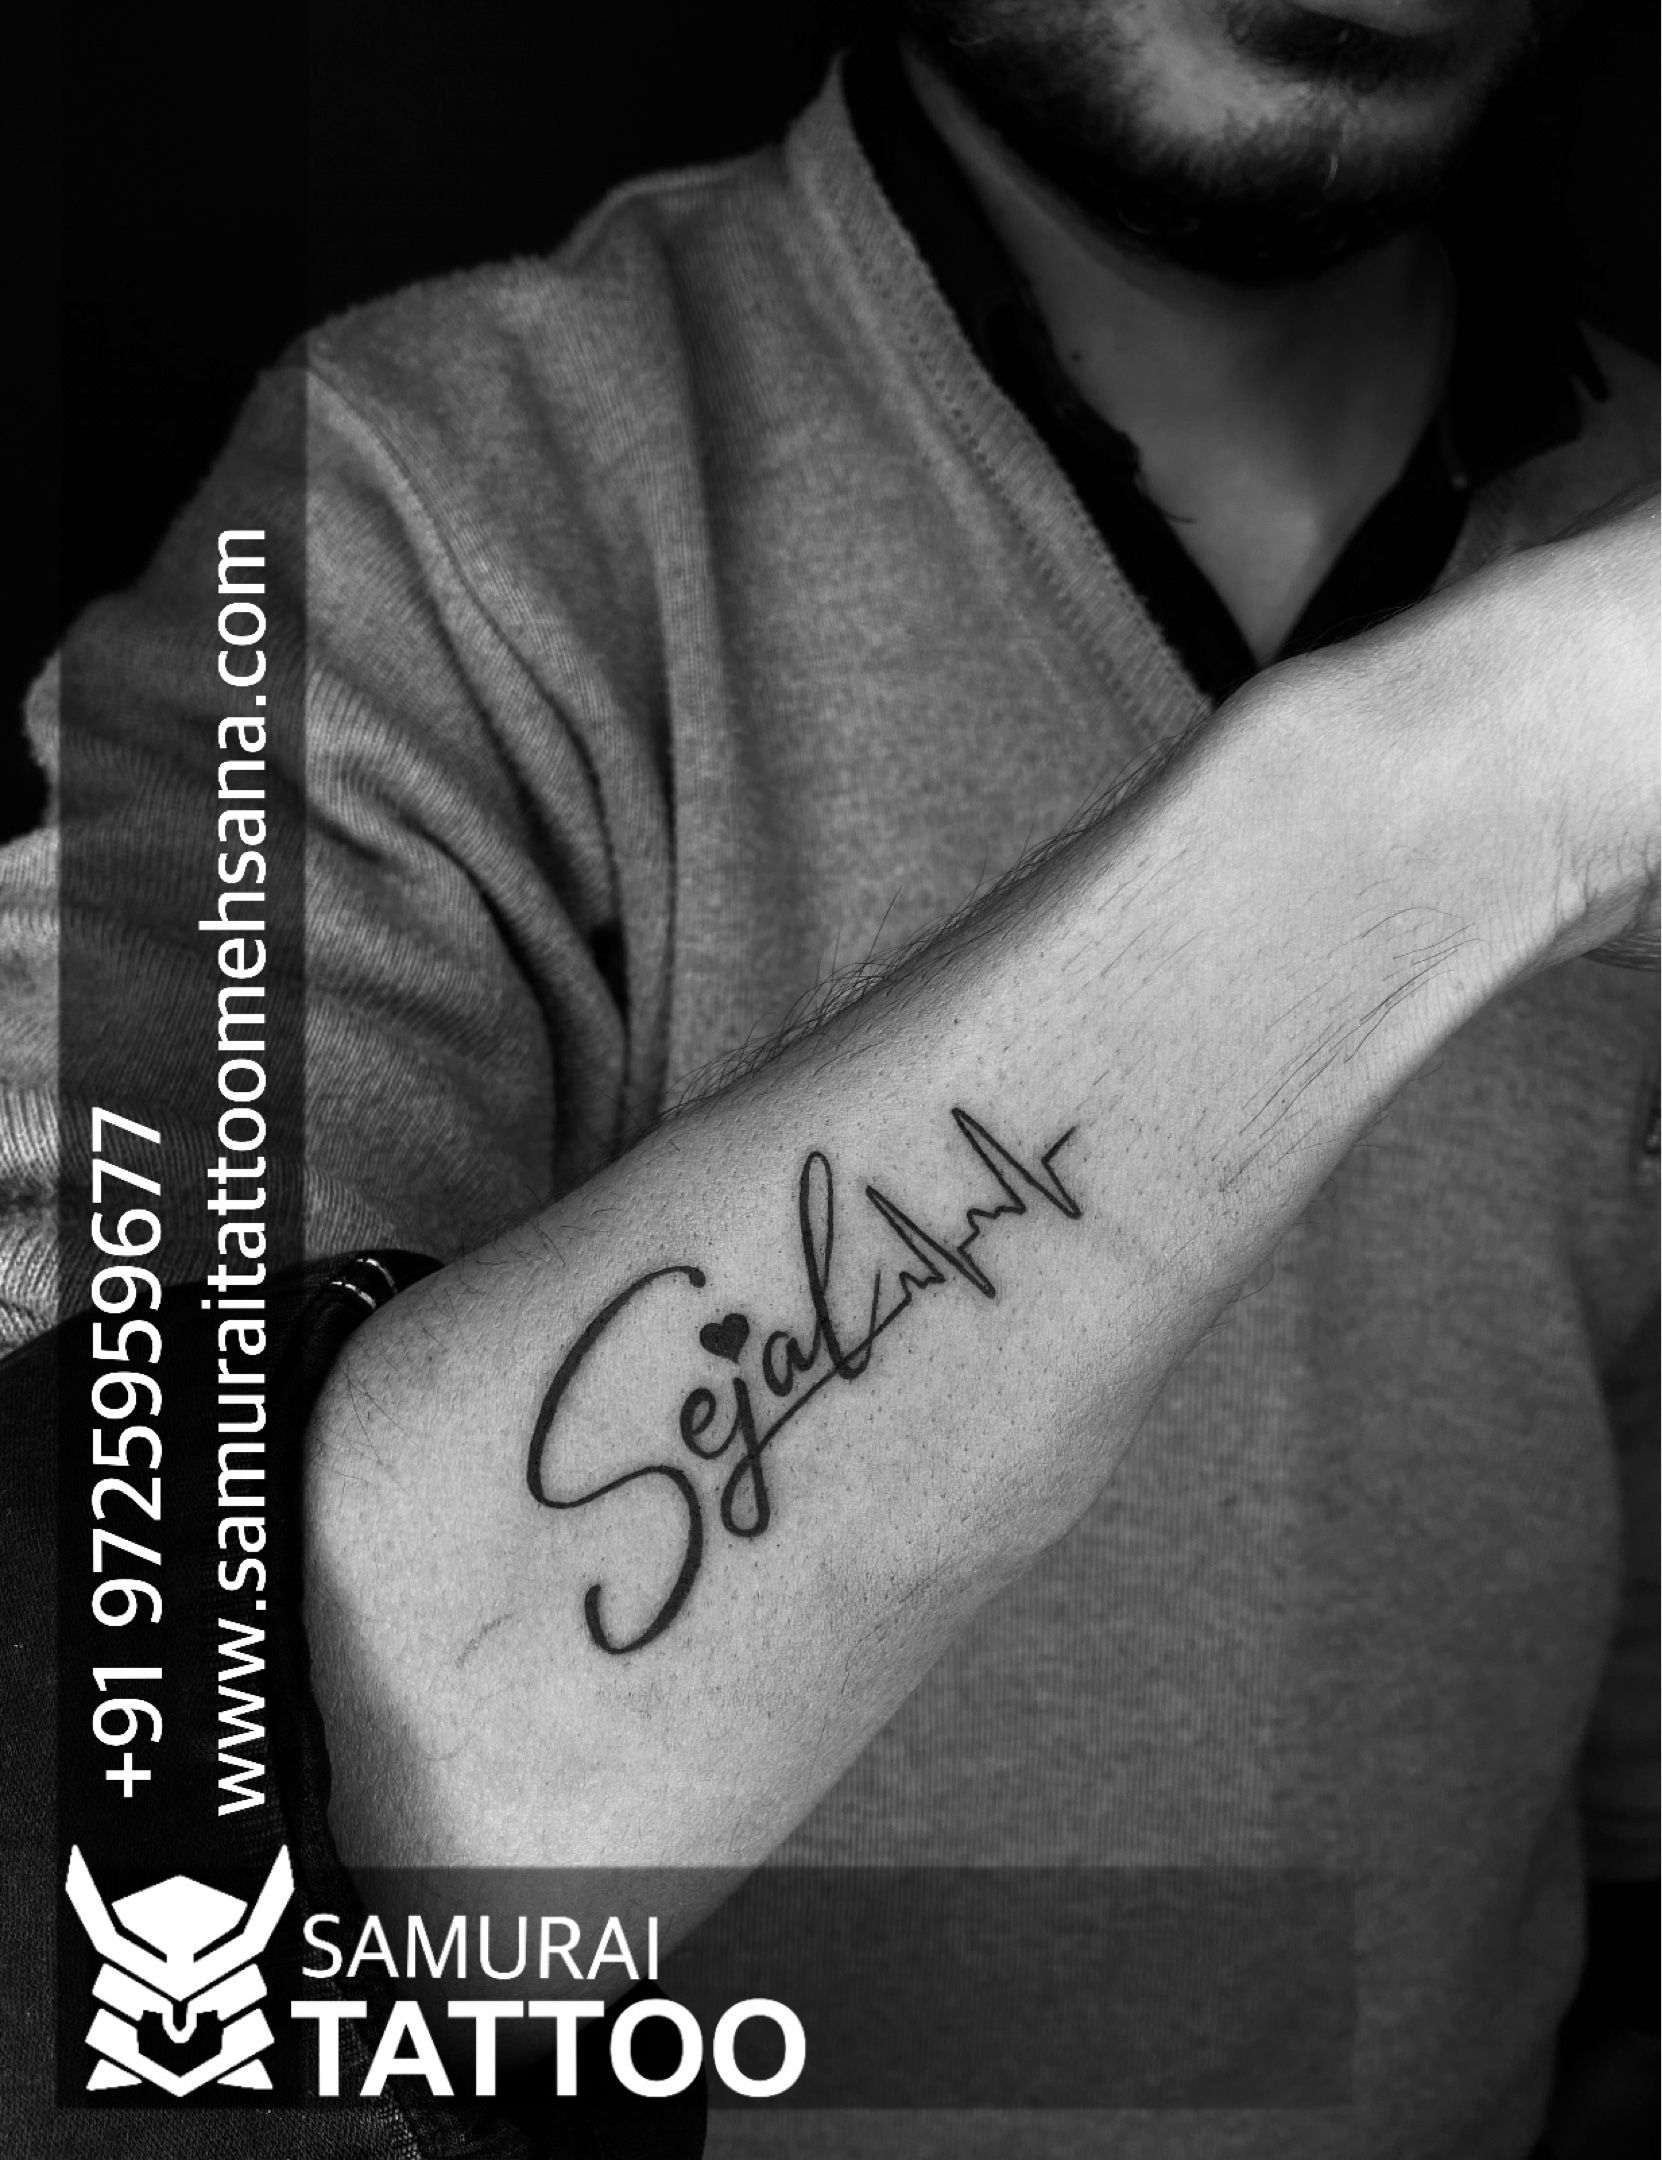 Tattoo uploaded by Samurai Tattoo mehsana  Sahil name tattoo Sahil tattoo  Sahil tattoo design Sahil name tattoo ideas  Tattoodo